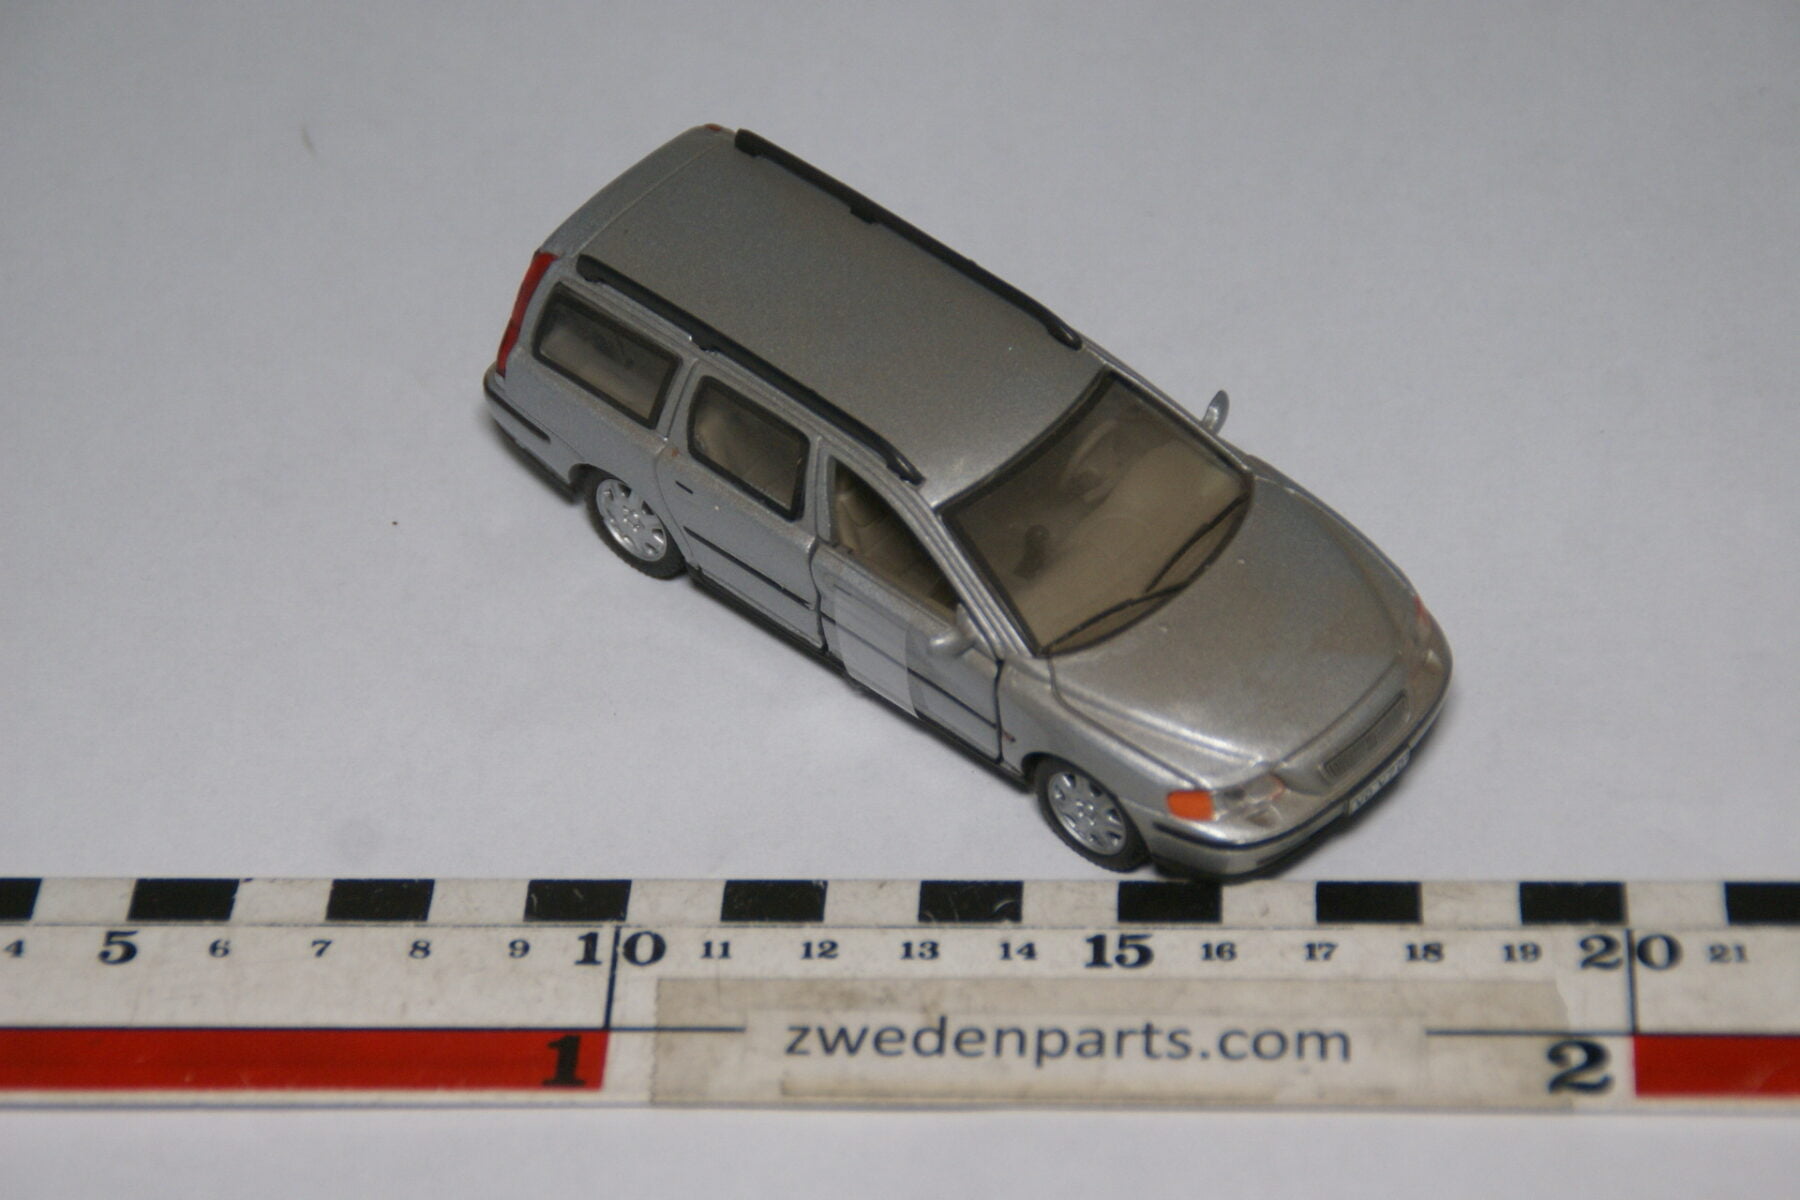 DSC09676 2000 miniatuur Volvo V70 1op43 mint-deba8aeb